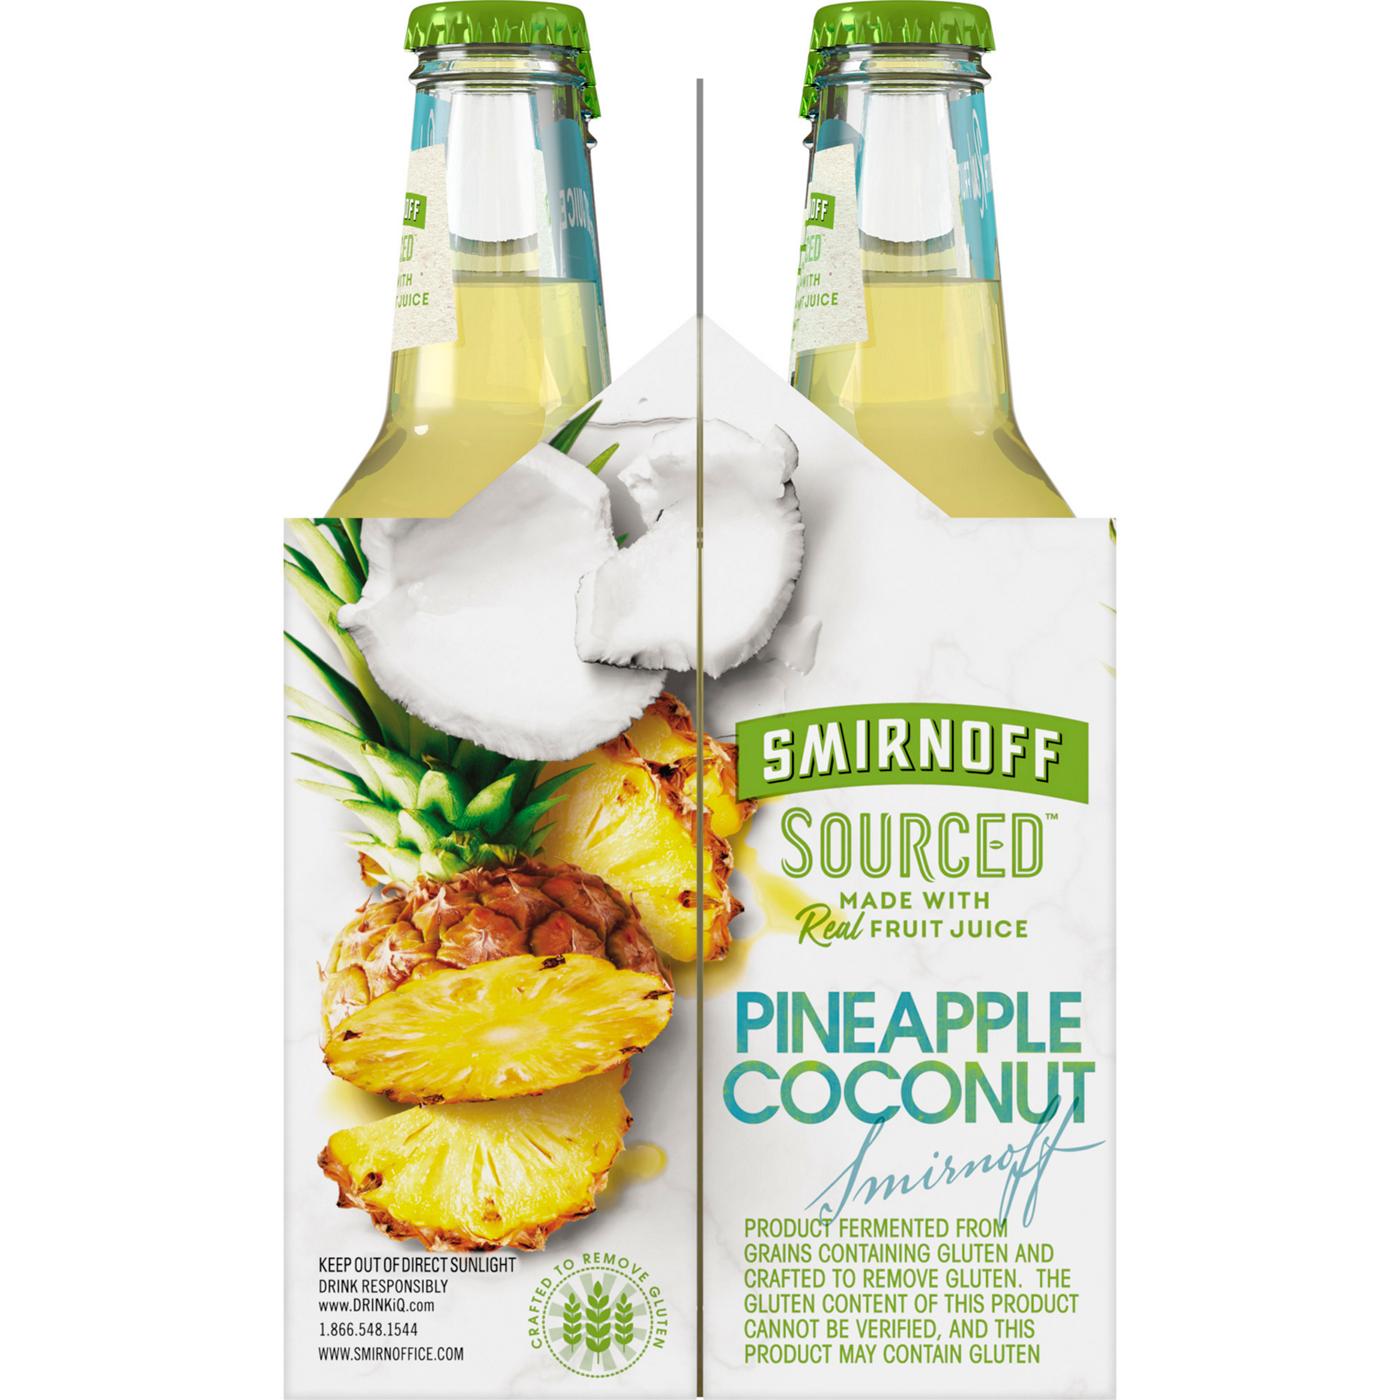 Smirnoff Sourced Pineapple Coconut; image 3 of 3